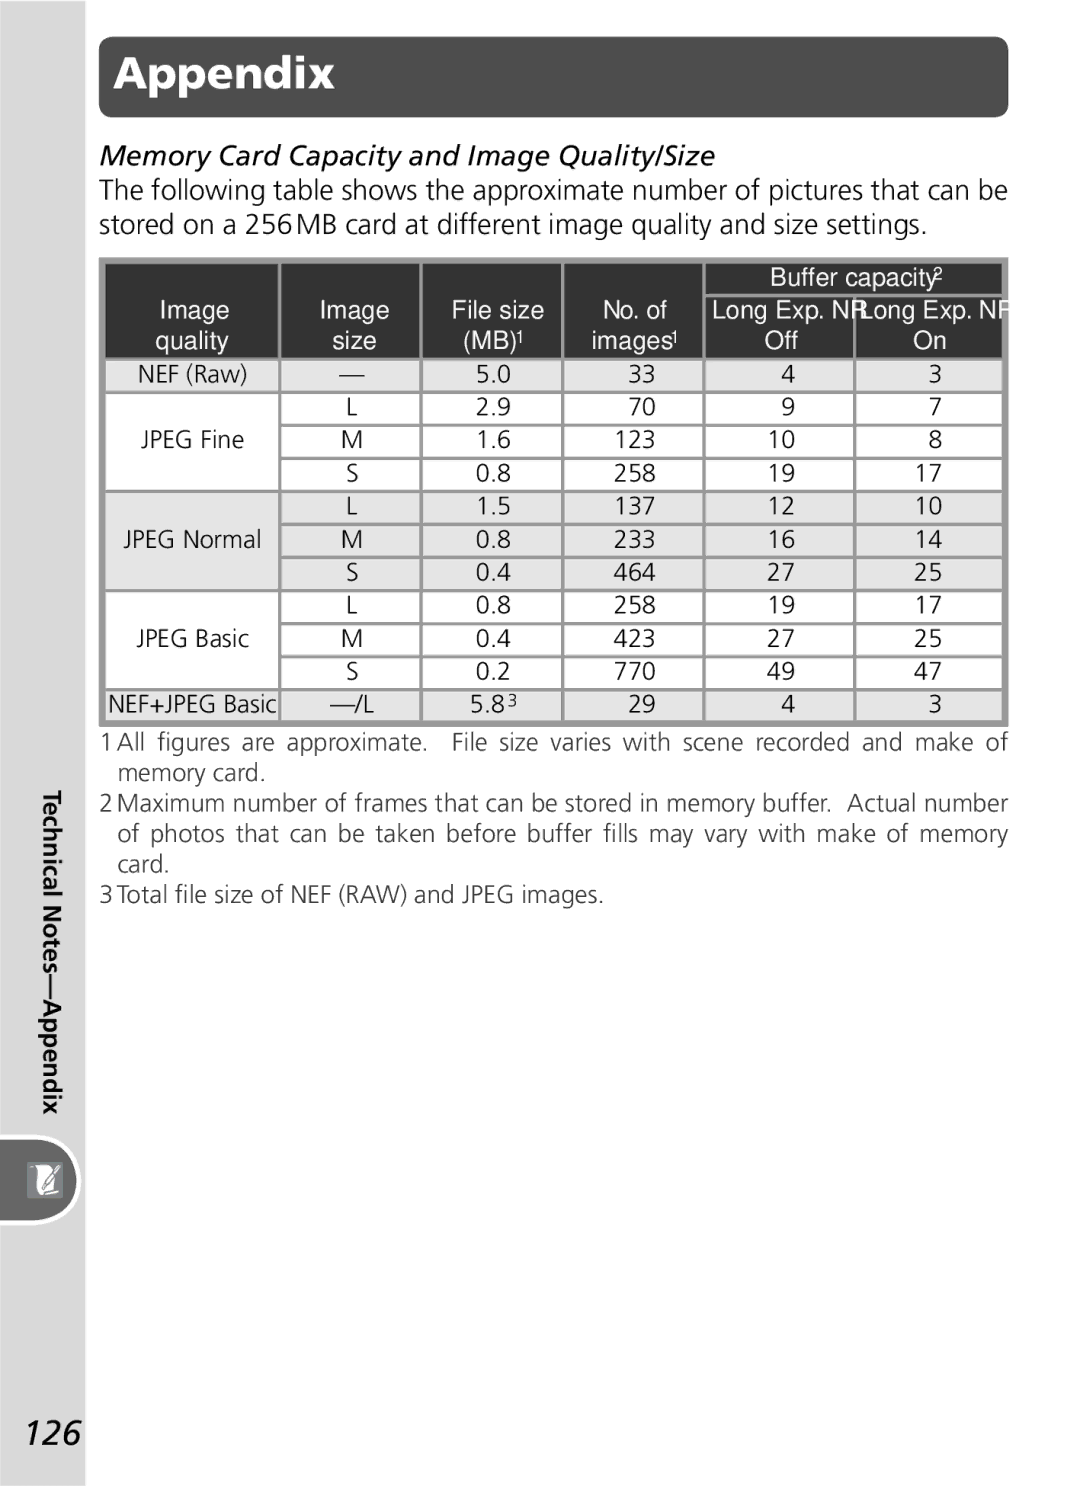 Nikon D50 manual Appendix, 126, Memory Card Capacity and Image Quality/Size 